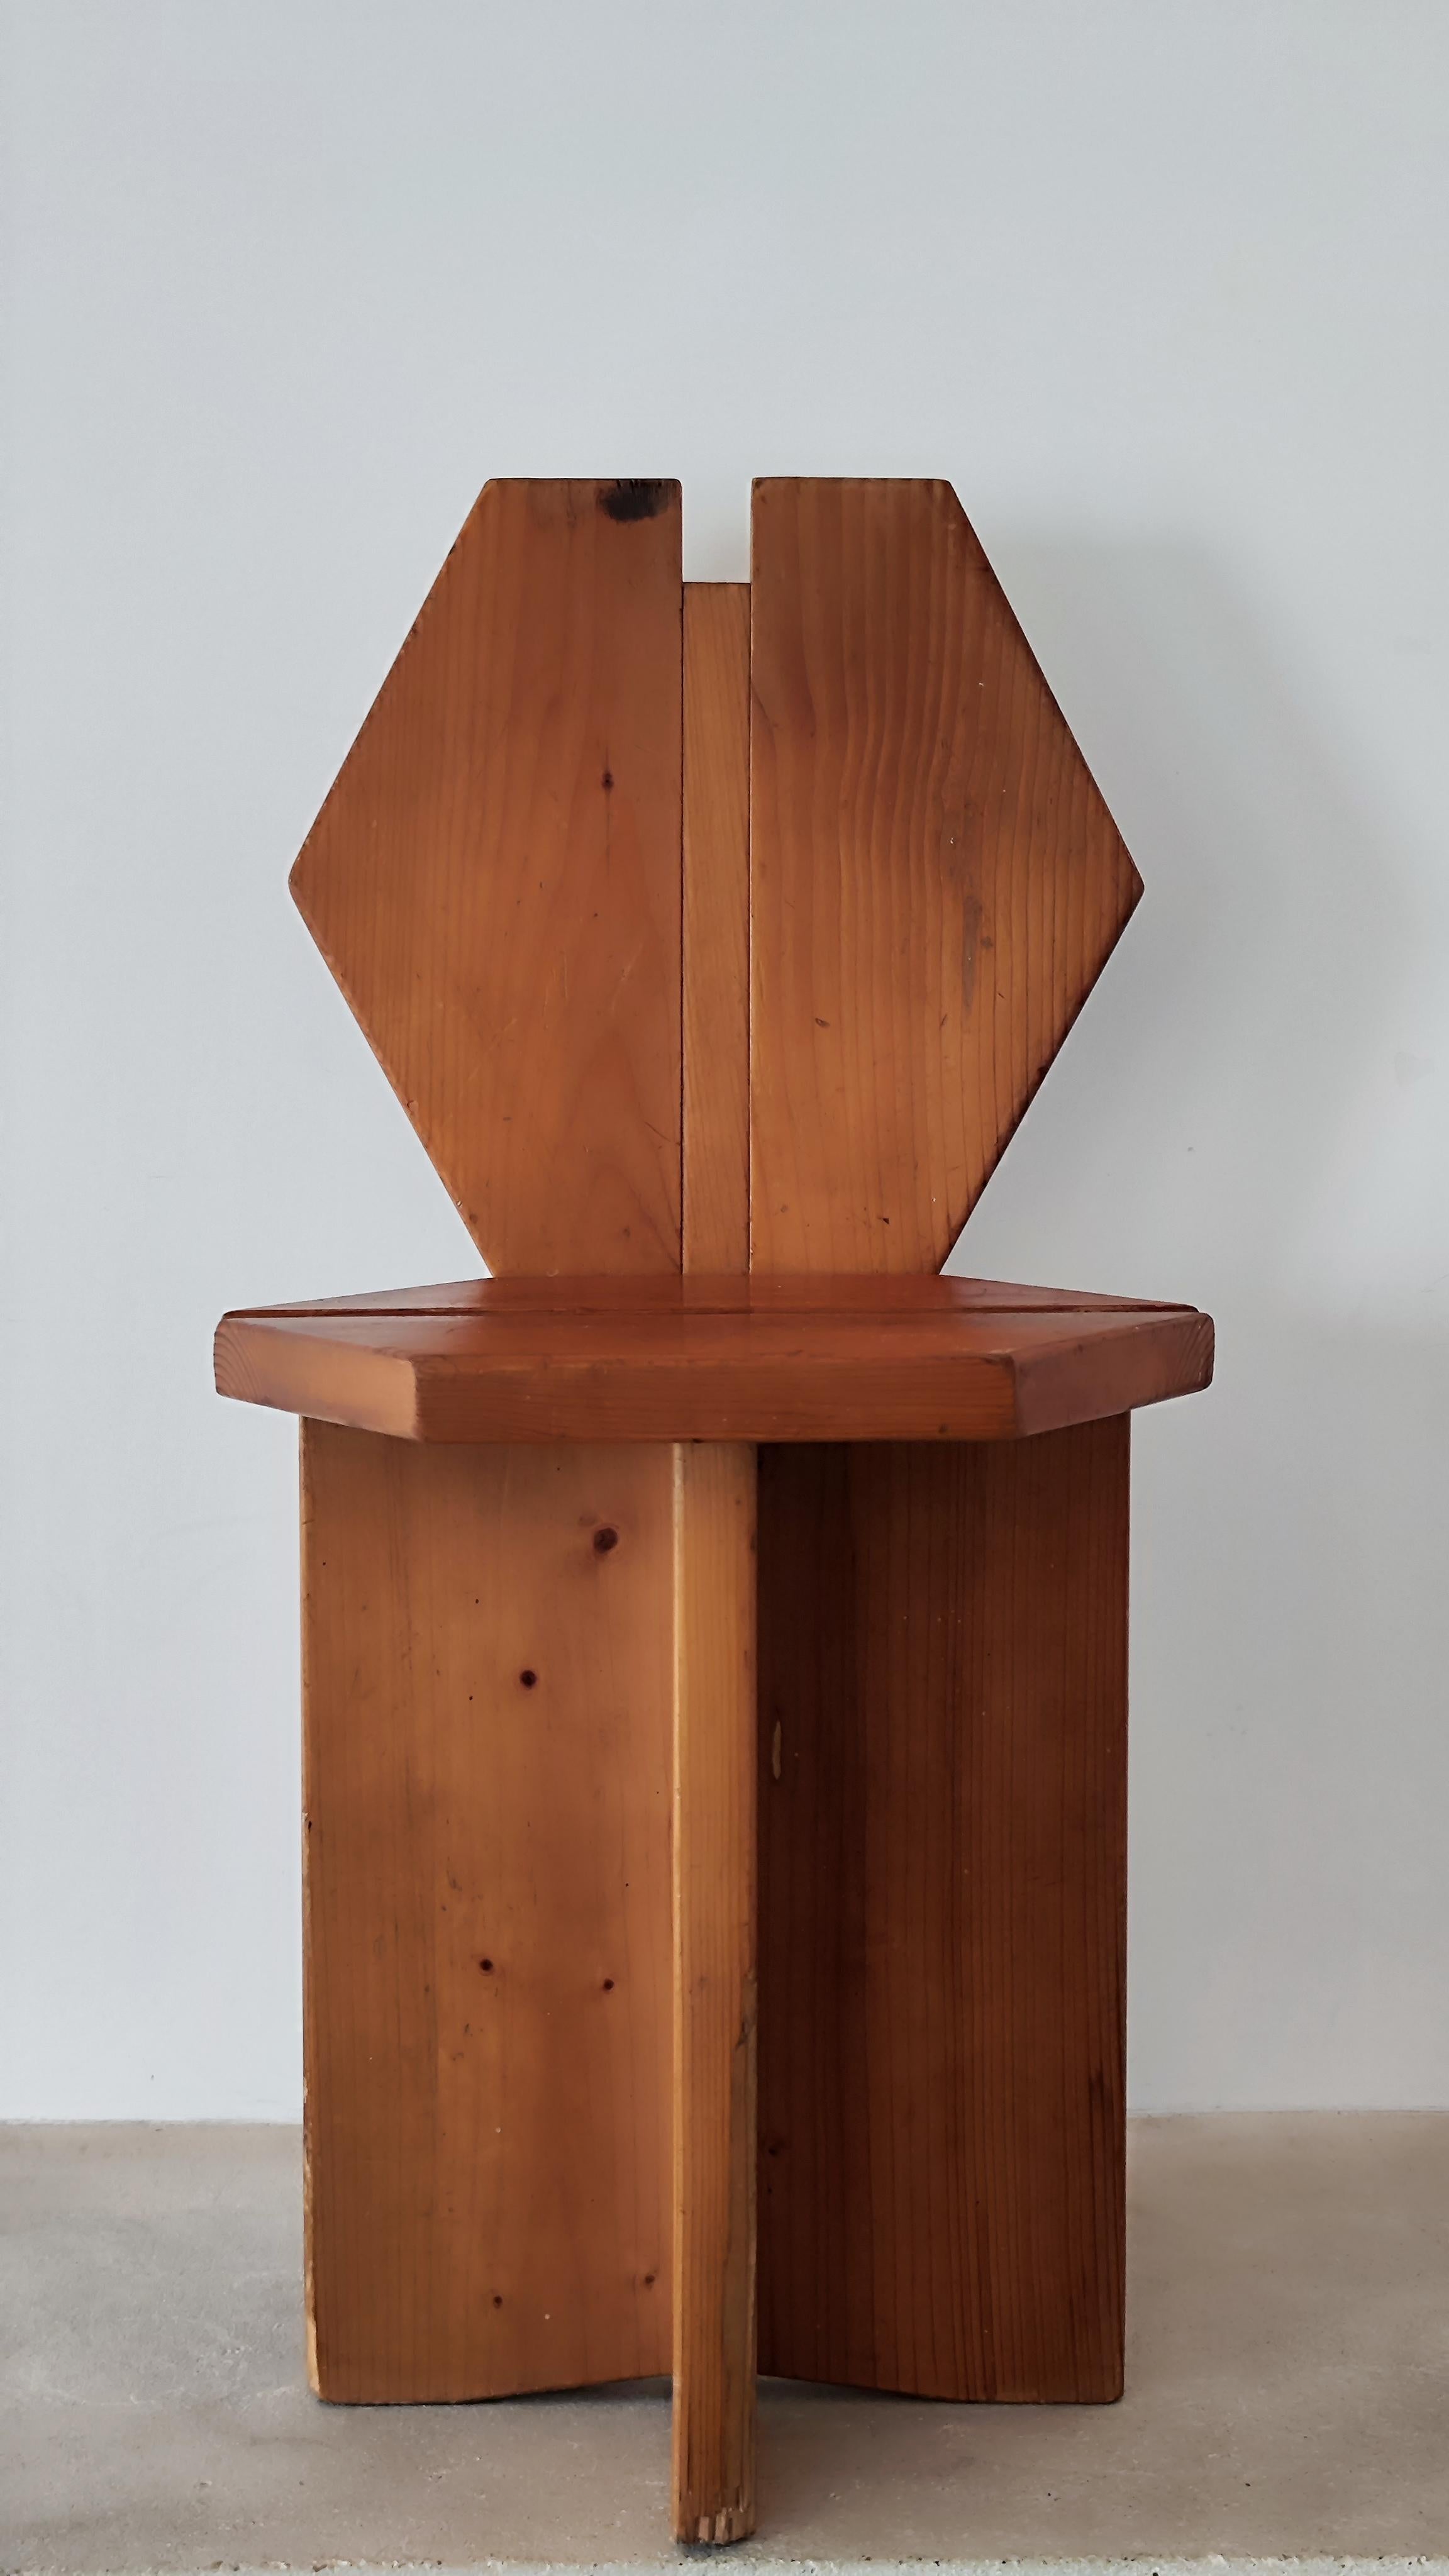 60s brutalist pine chair - France - René Martin for Perriand. 1960.
.
René Martin was Charlotte Perriand's cabinetmaker in Méribel-les-Allues. 